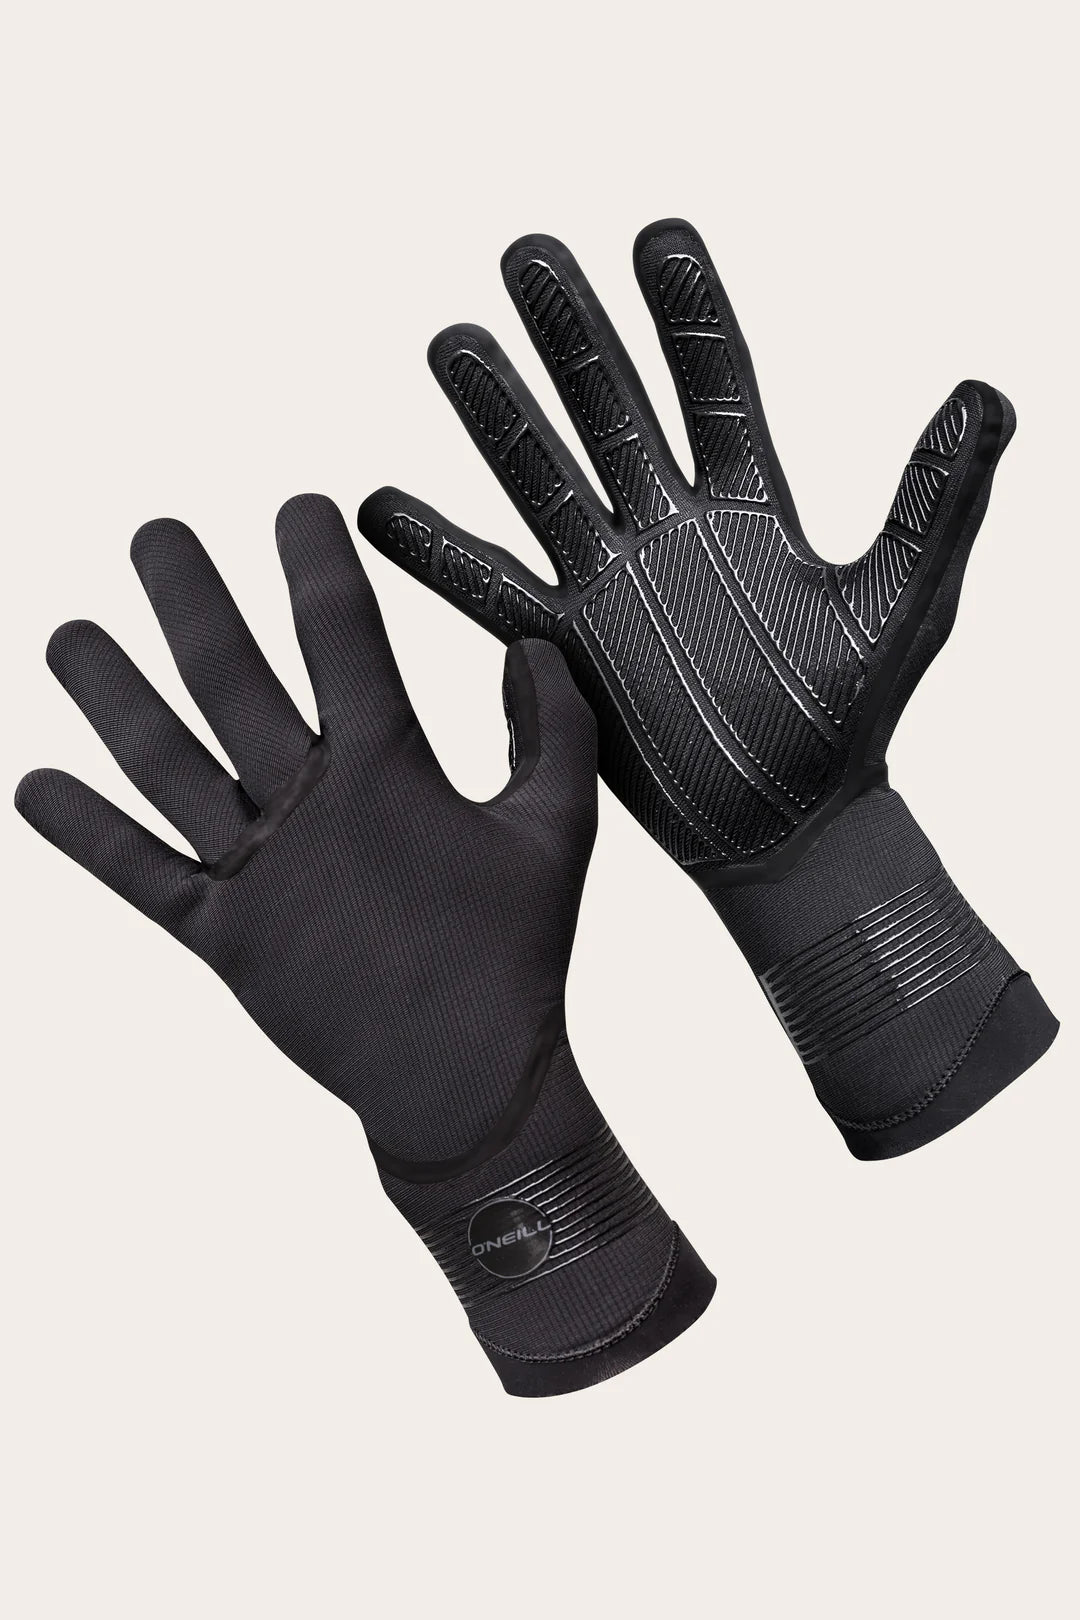 5104 Psycho Tech 3mm Gloves